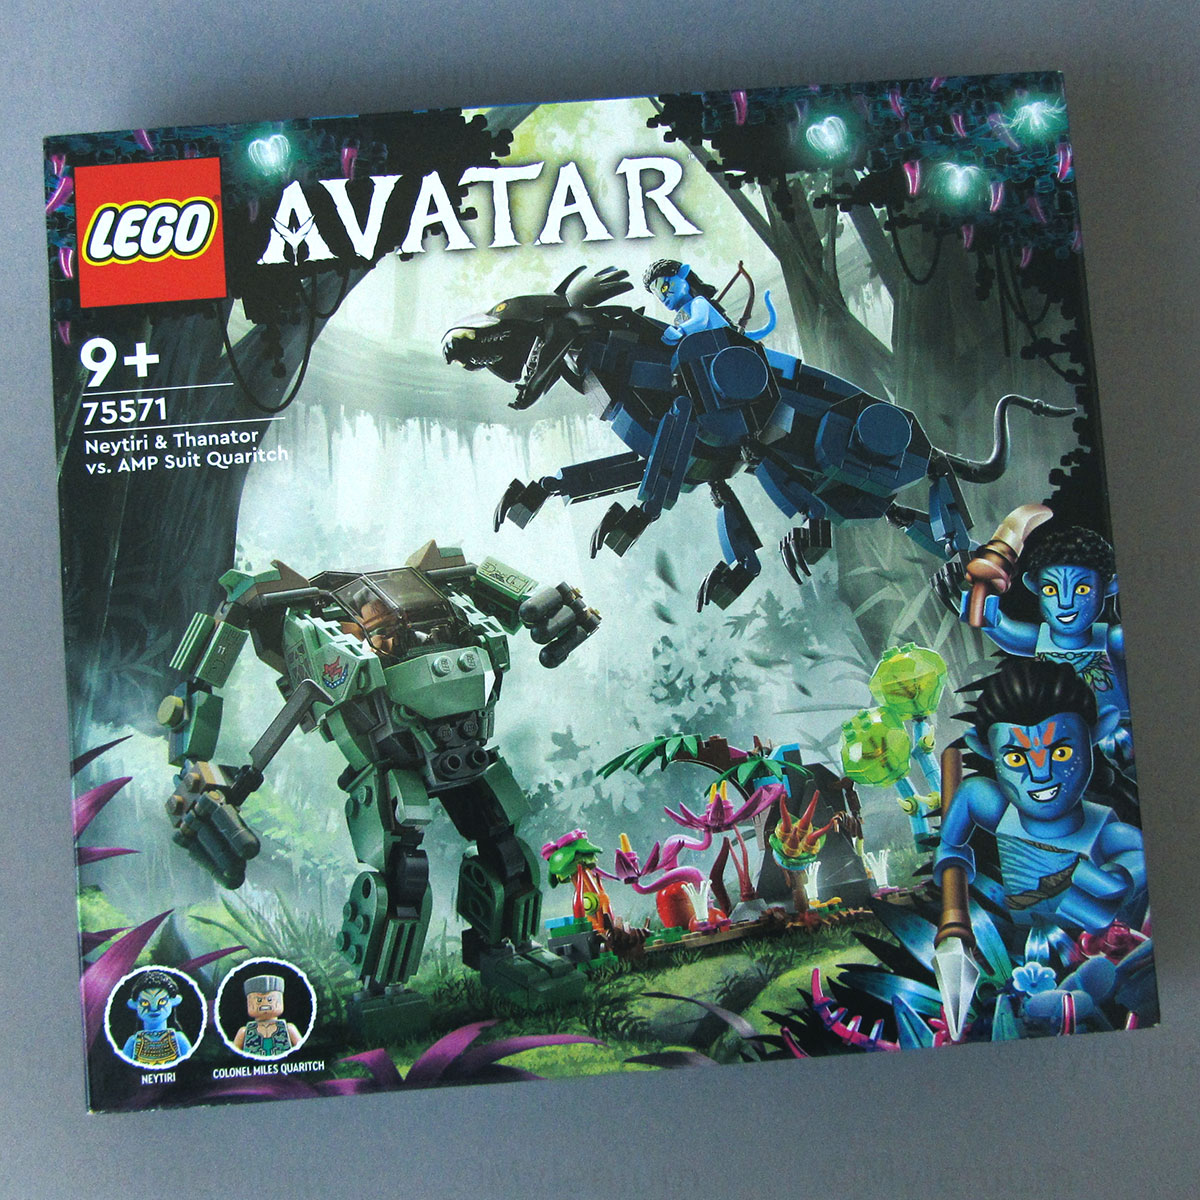 LEGO Avatar, Neytiri & Thanator vs. AMP Suit Quaritch (75571), Box